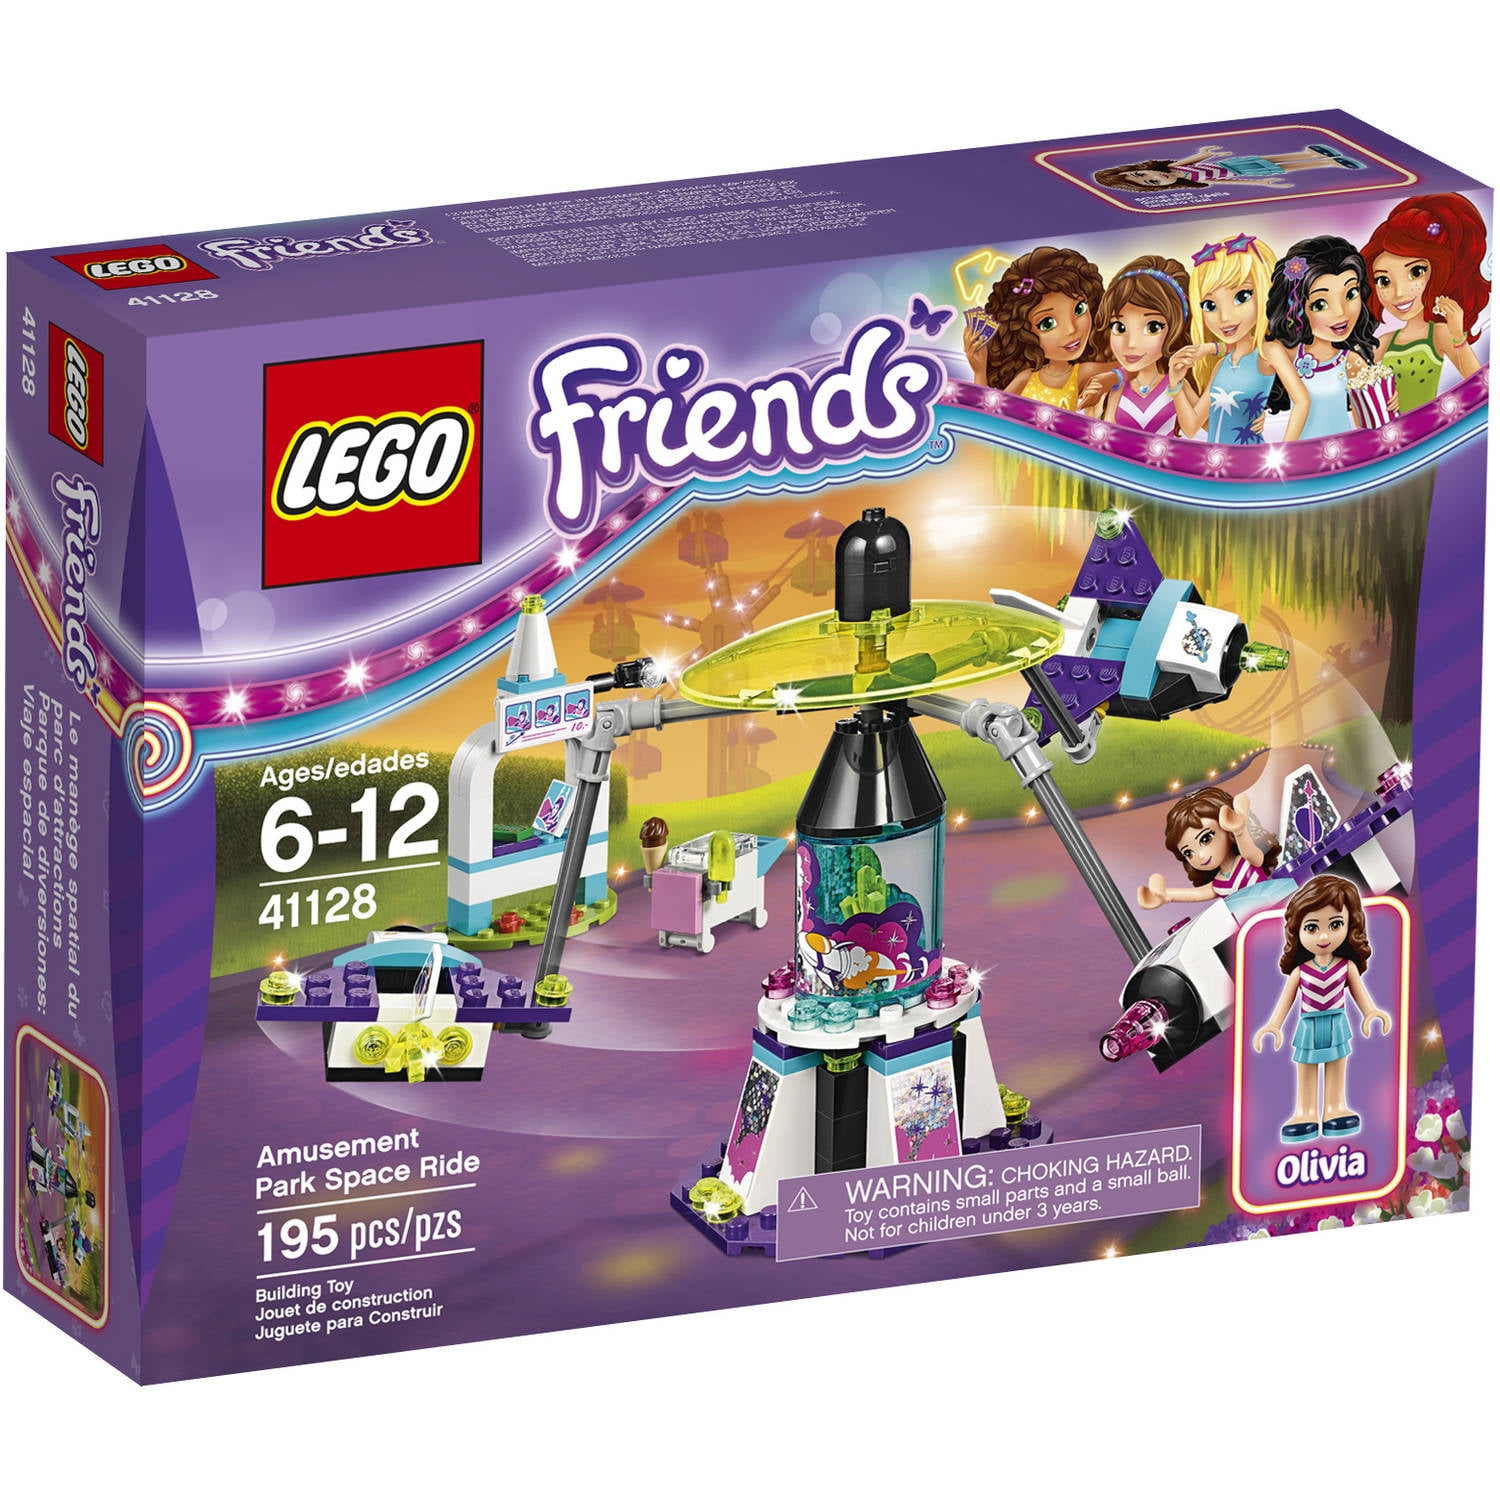 kalv Taxpayer udredning LEGO Friends Amusement Park Space Ride 41128 - Walmart.com